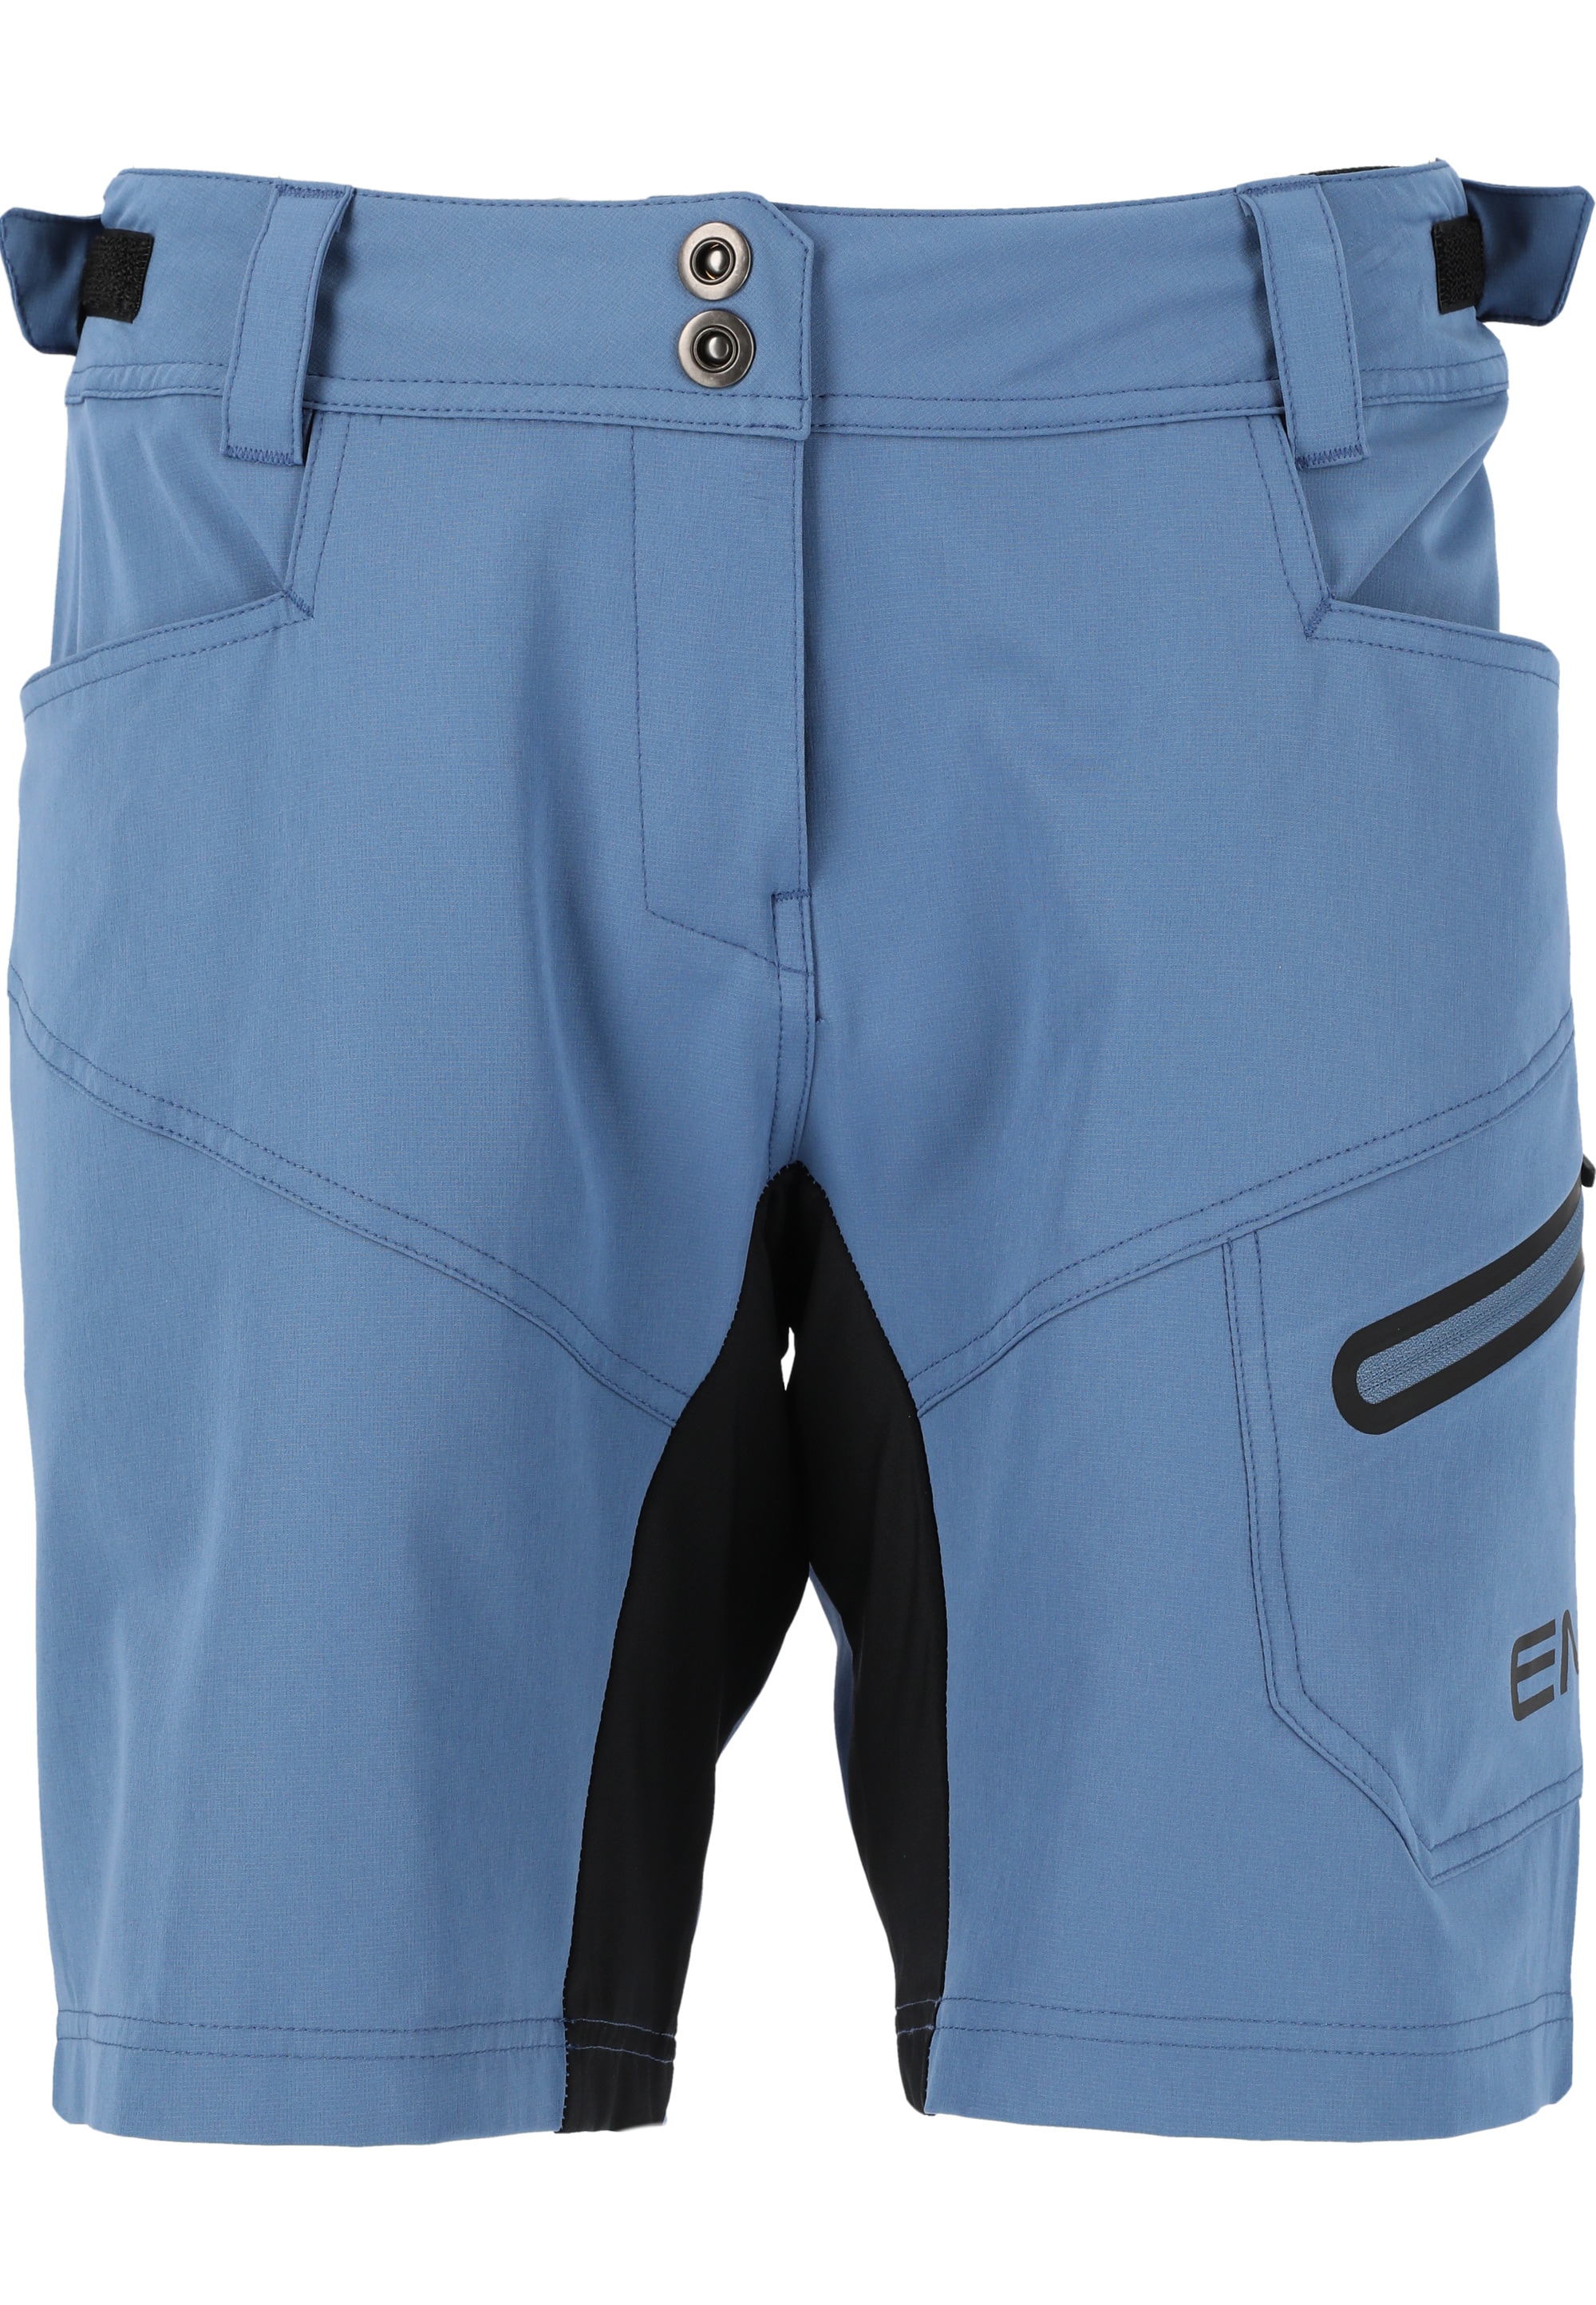 ENDURANCE Radhose Shorts«, Tights mit 1 W 2 herausnehmbarer in shoppen Innen- »Jamilla